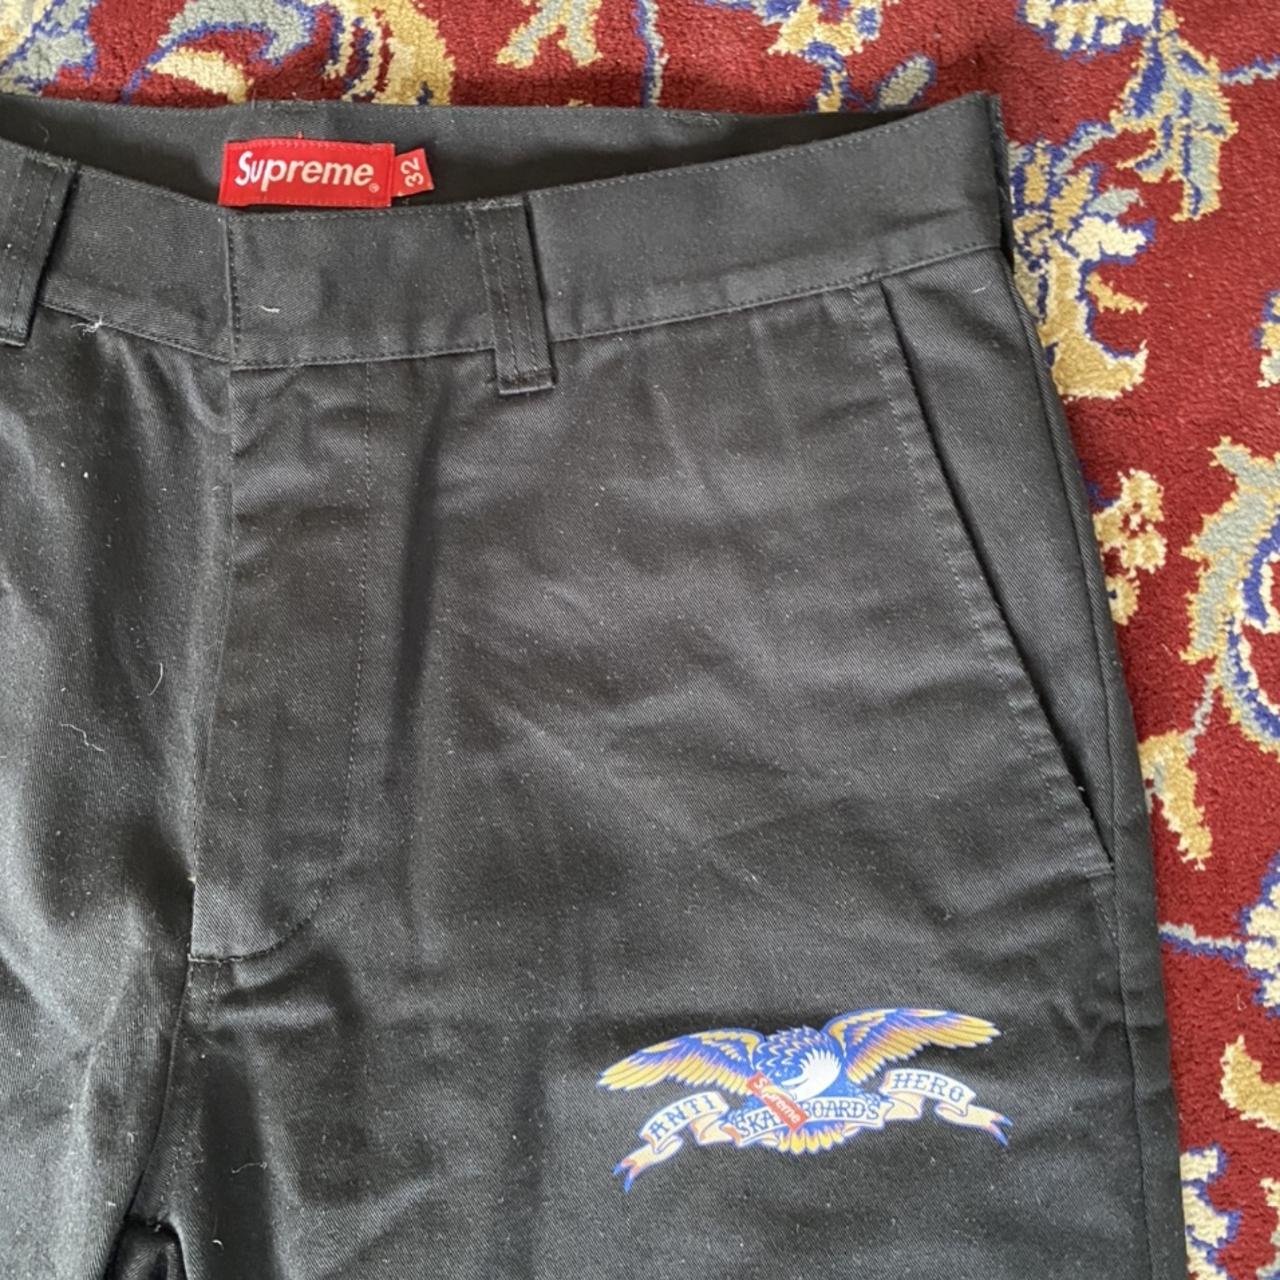 Supreme x Anti Hero Work-pants, Size : 32, Never worn.